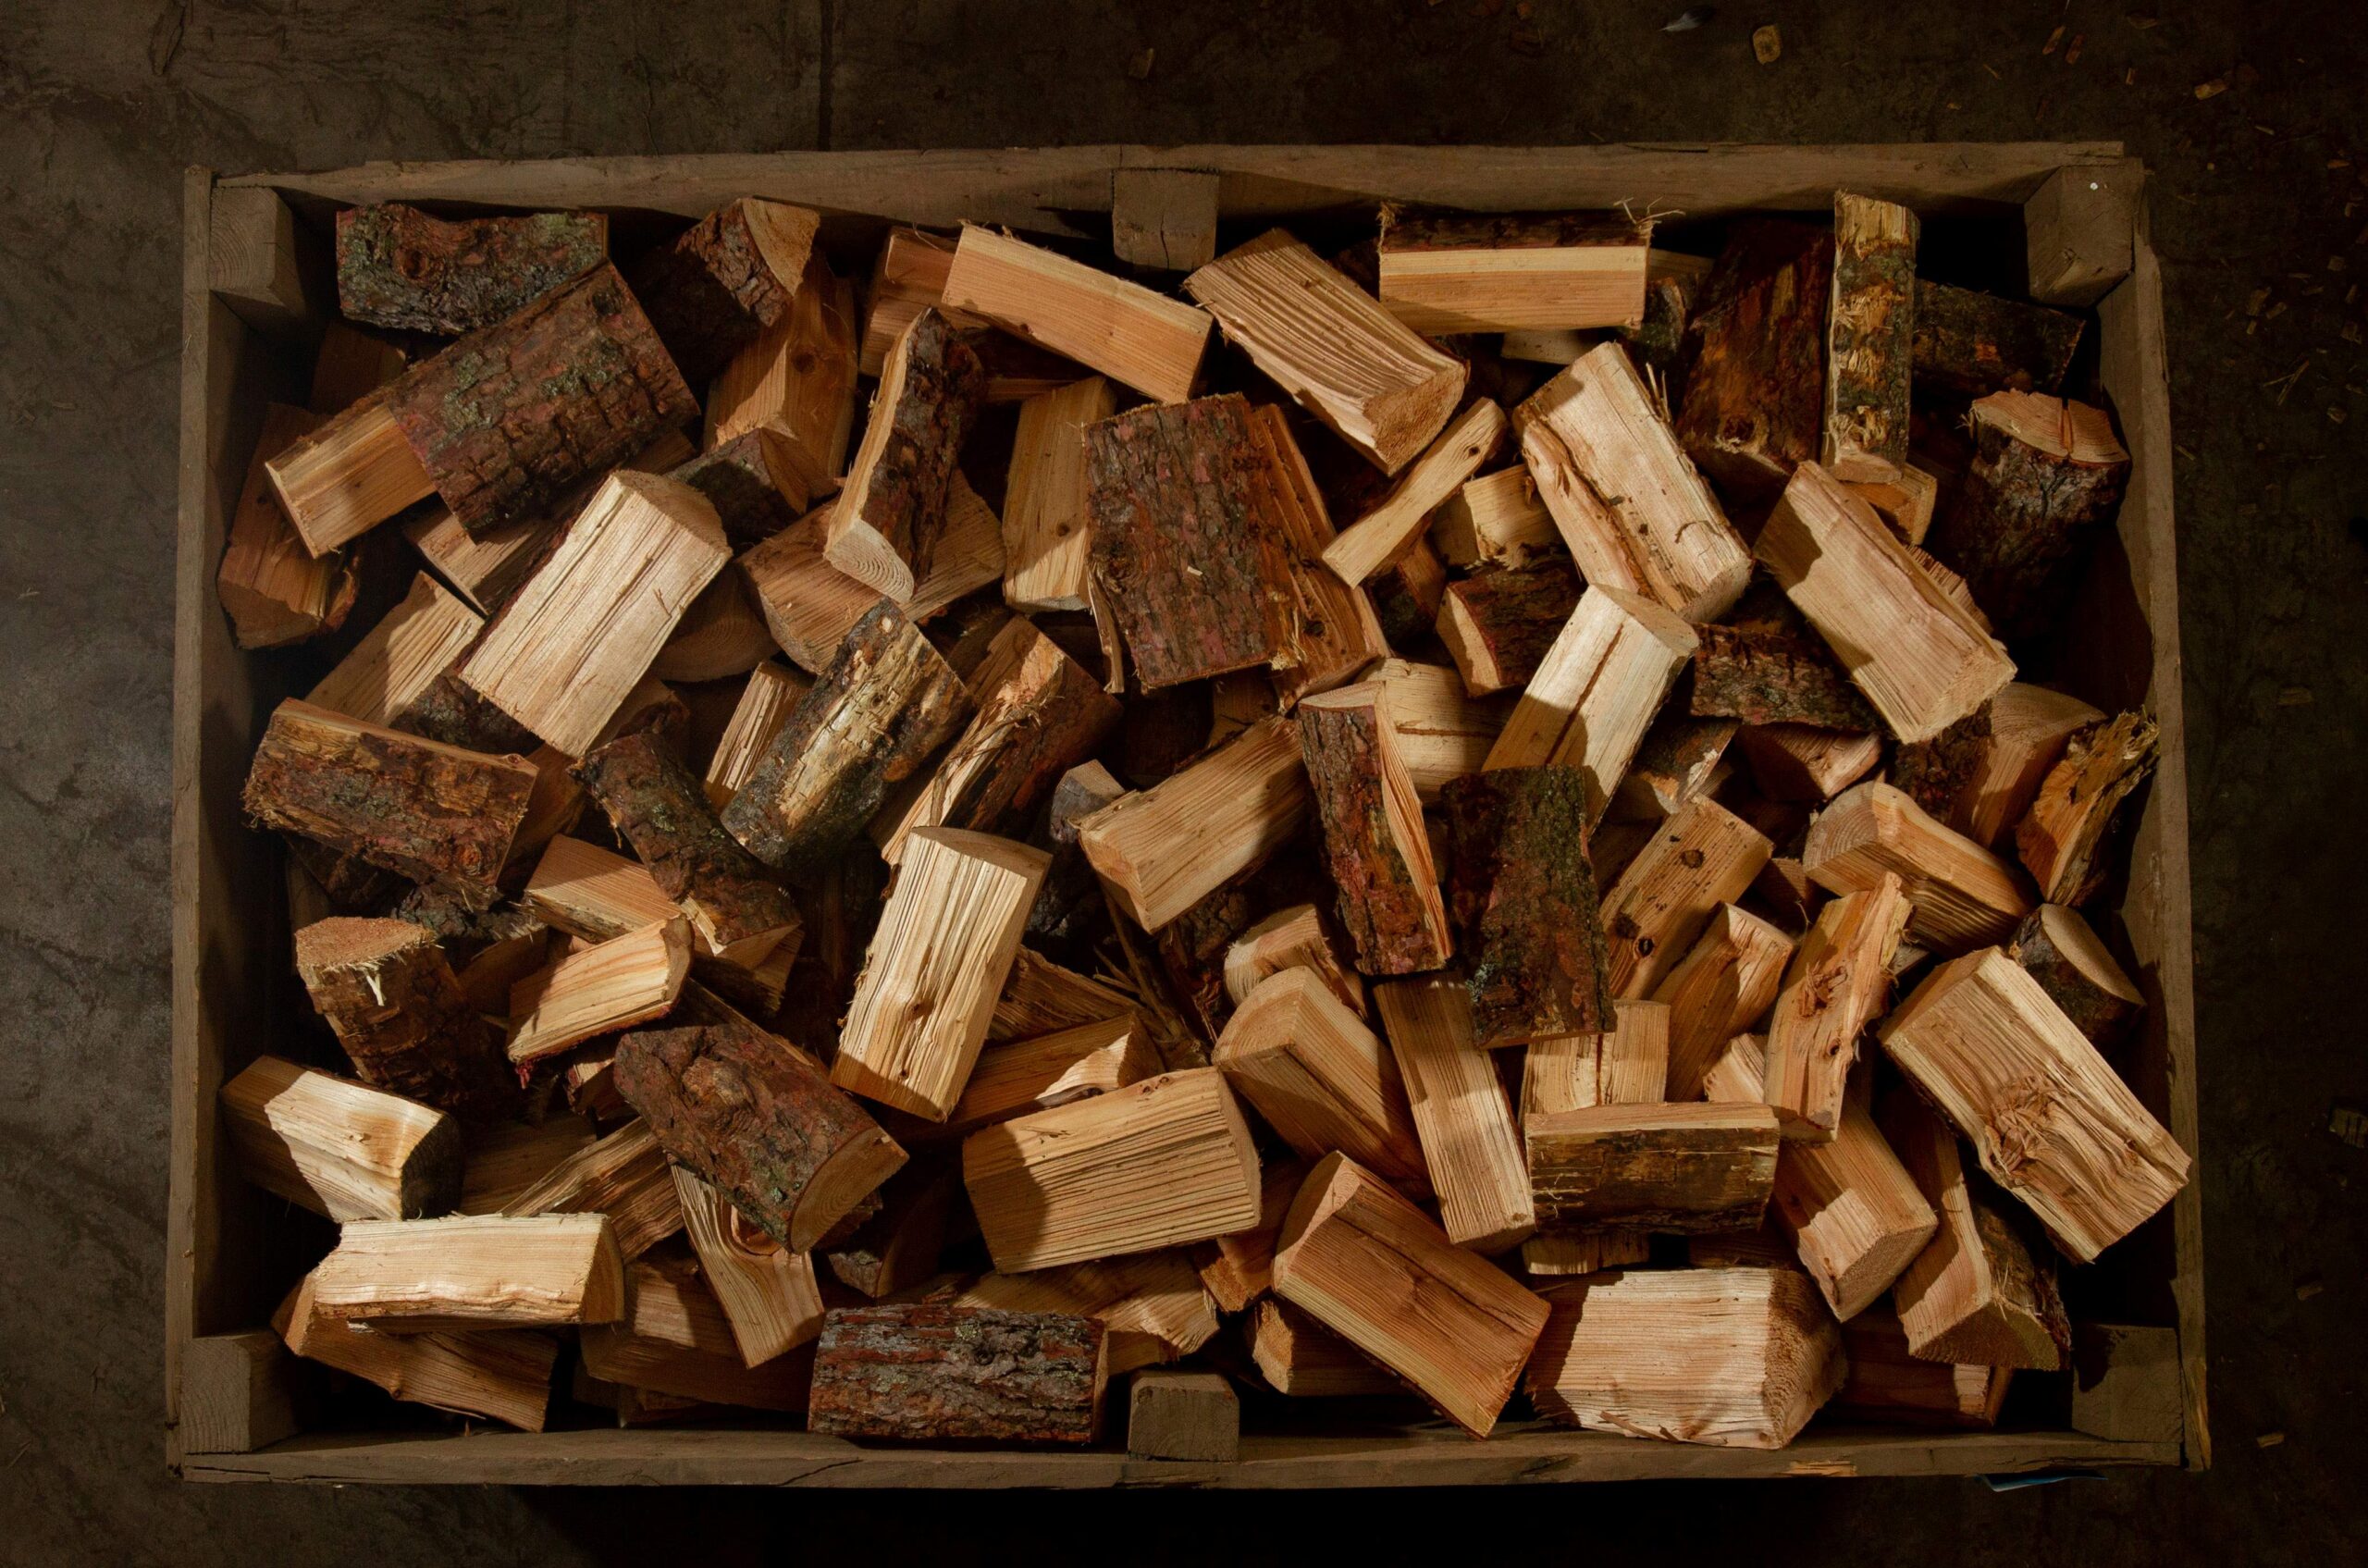 An image of Firewood Express kiln dried firewood logs